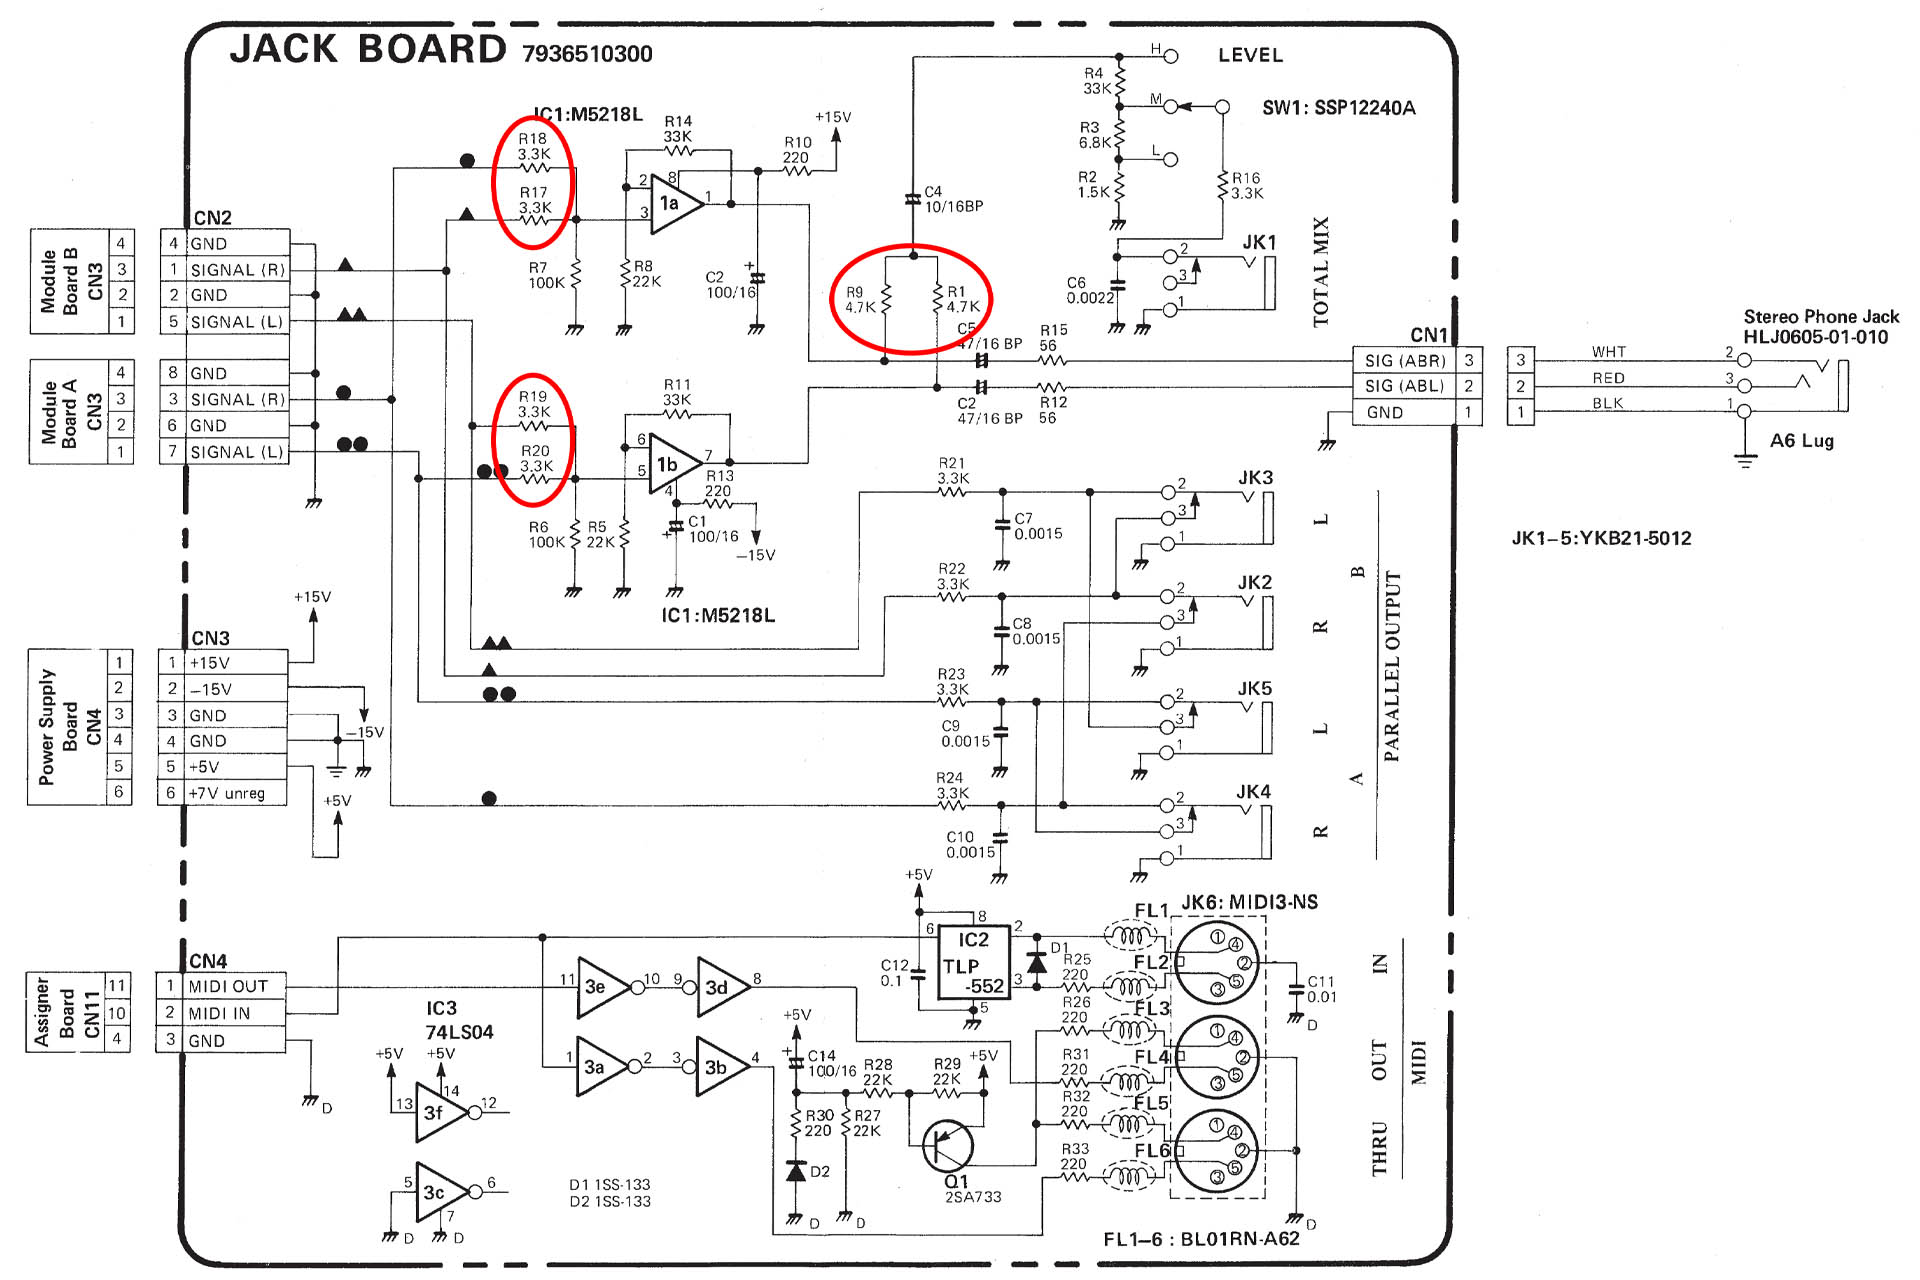 MKS-70 jack-board schematic showing potential for crosstalk